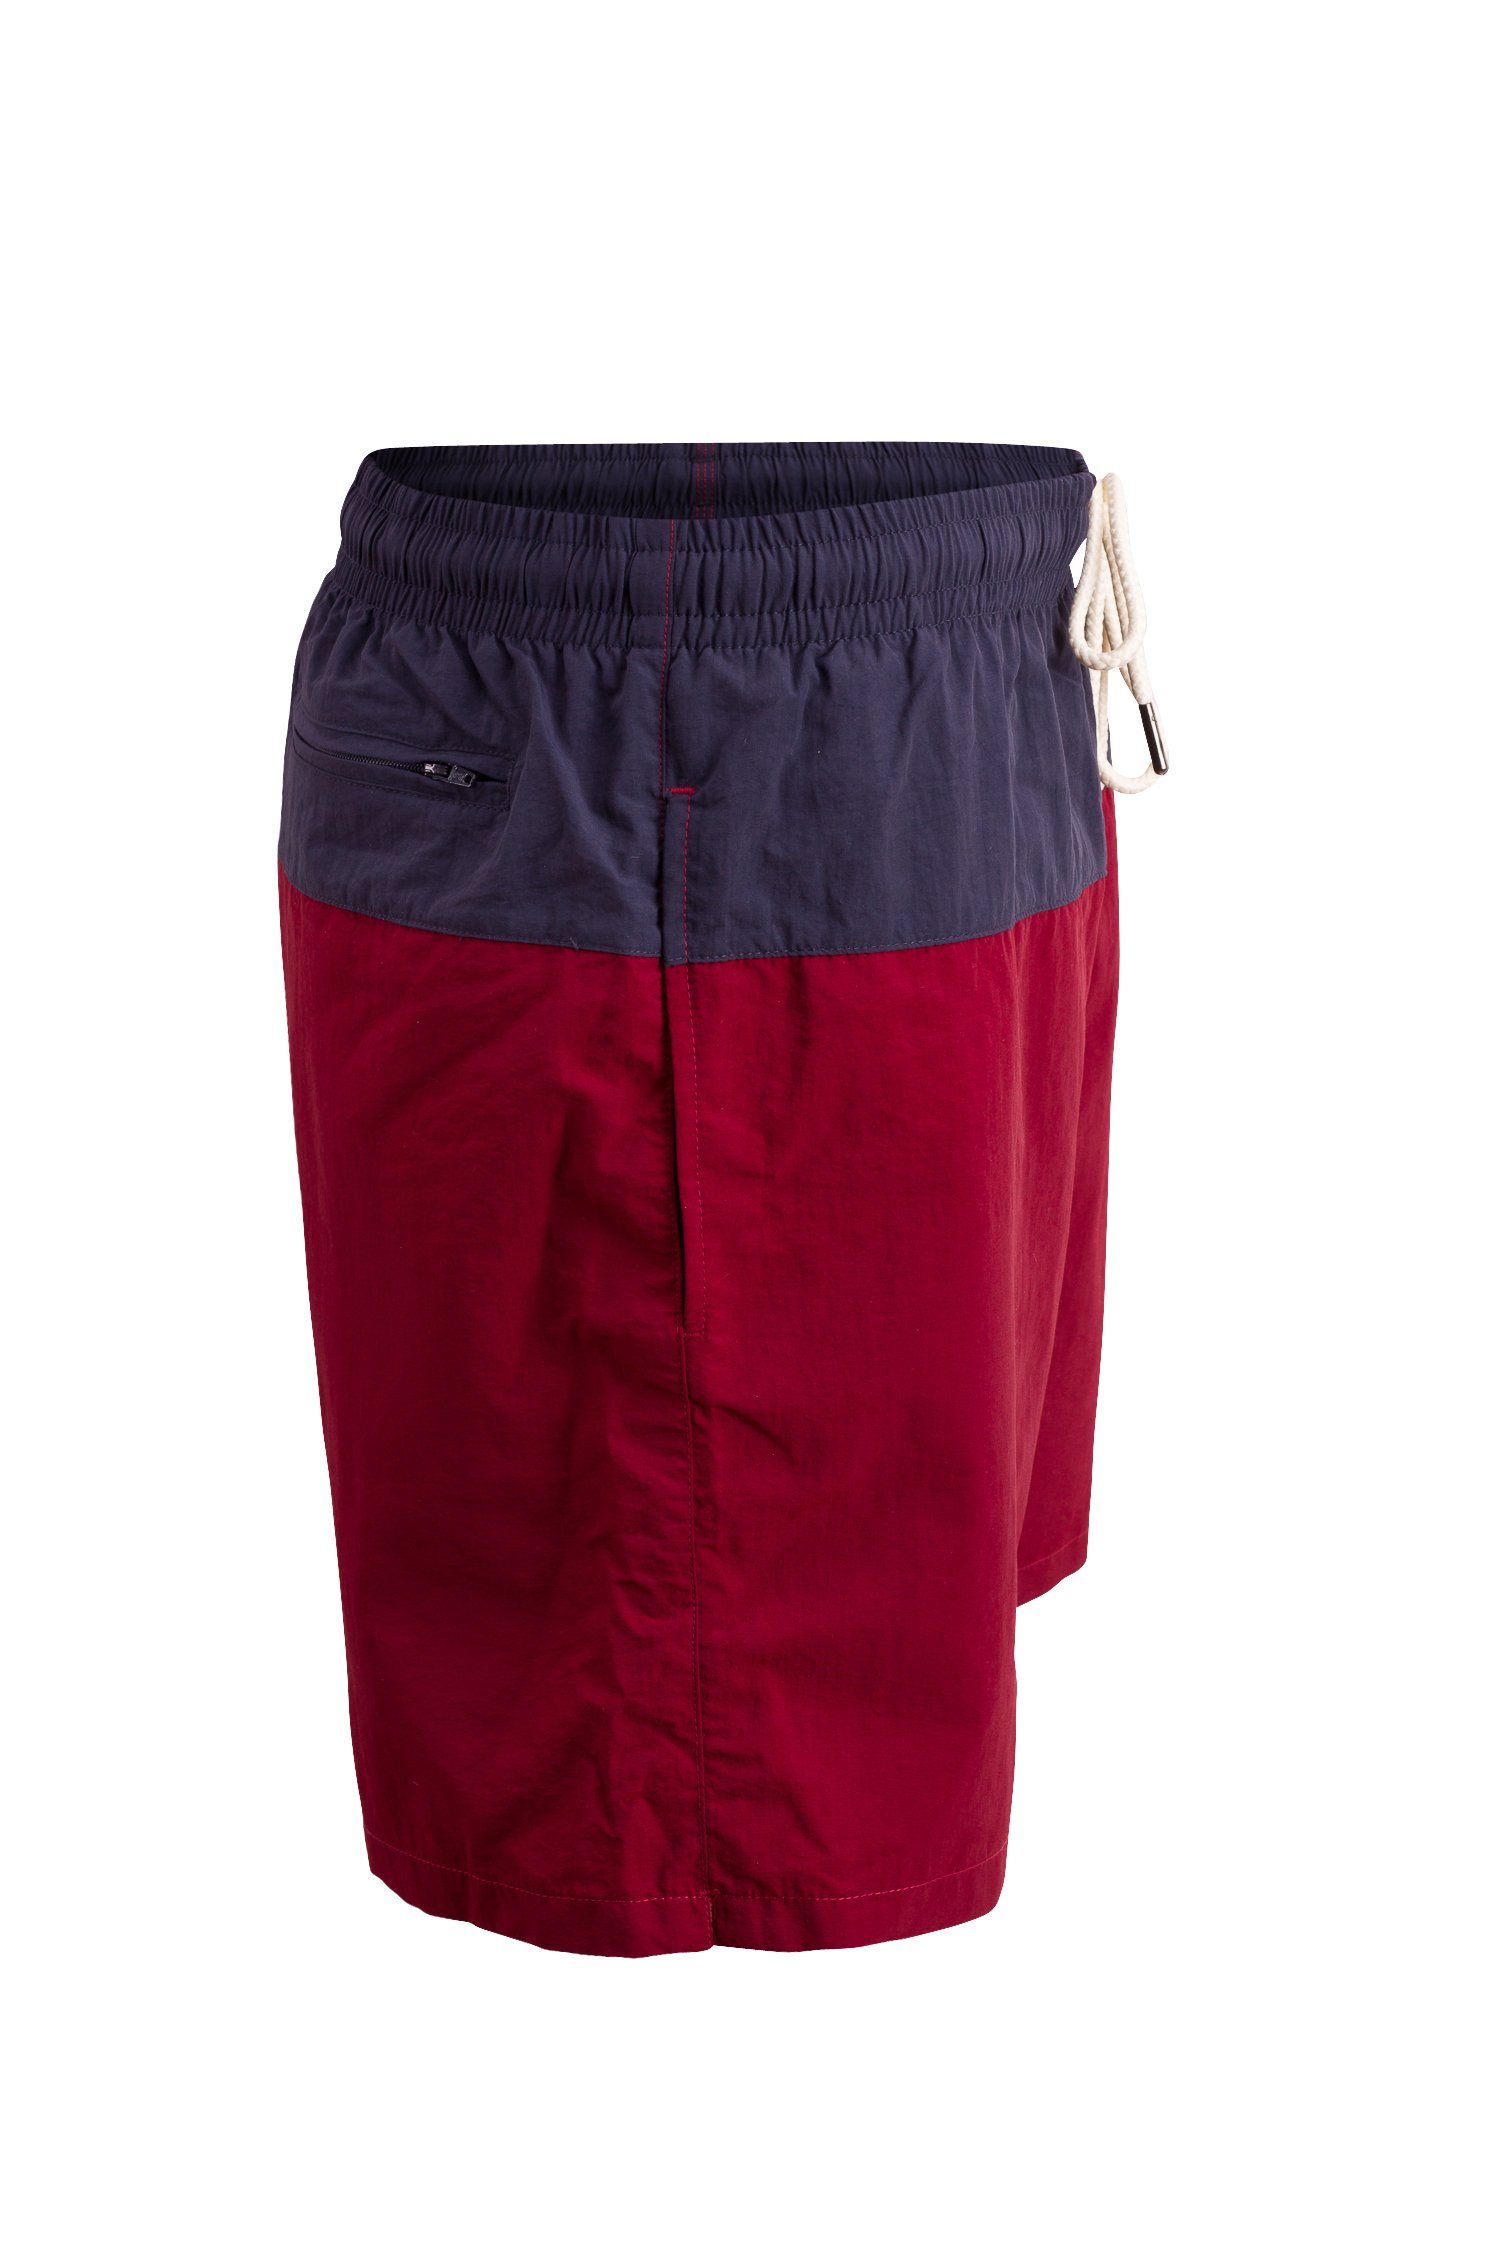 Badehosen Red/Navy Swim Manufaktur13 schnelltrocknend - Shorts Badeshorts